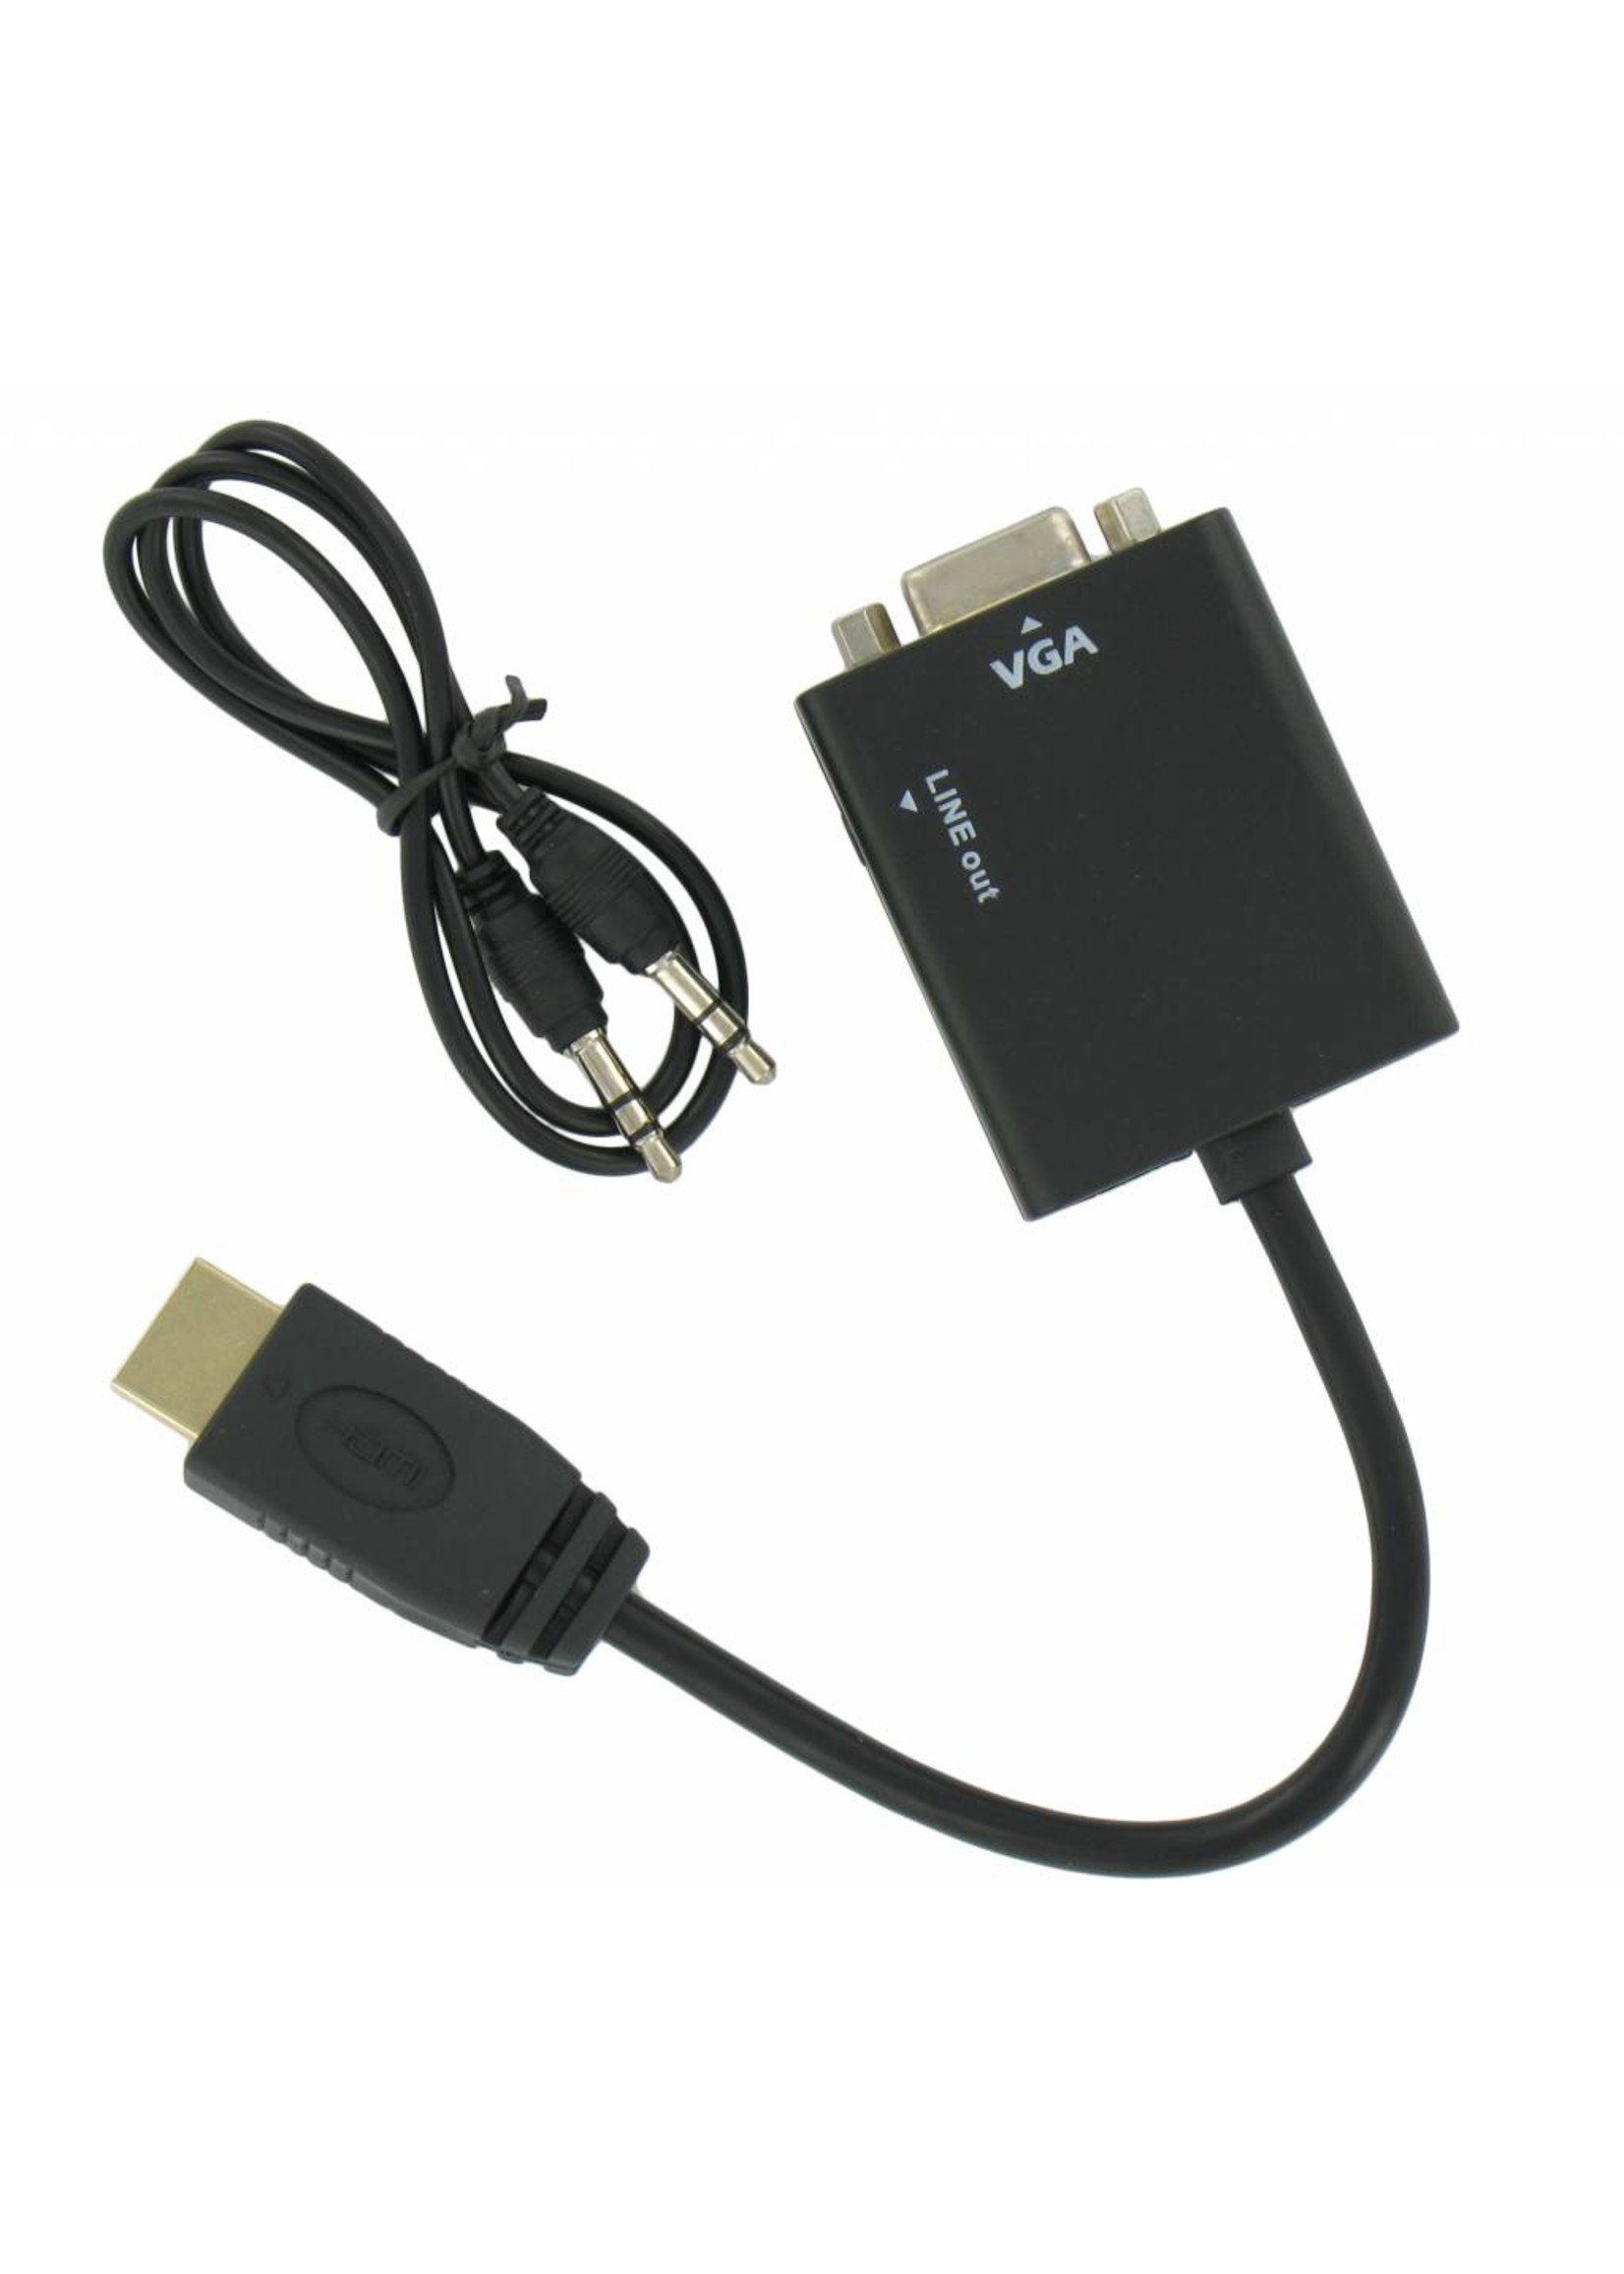 HDMI to VGA + Audio Converter Cable